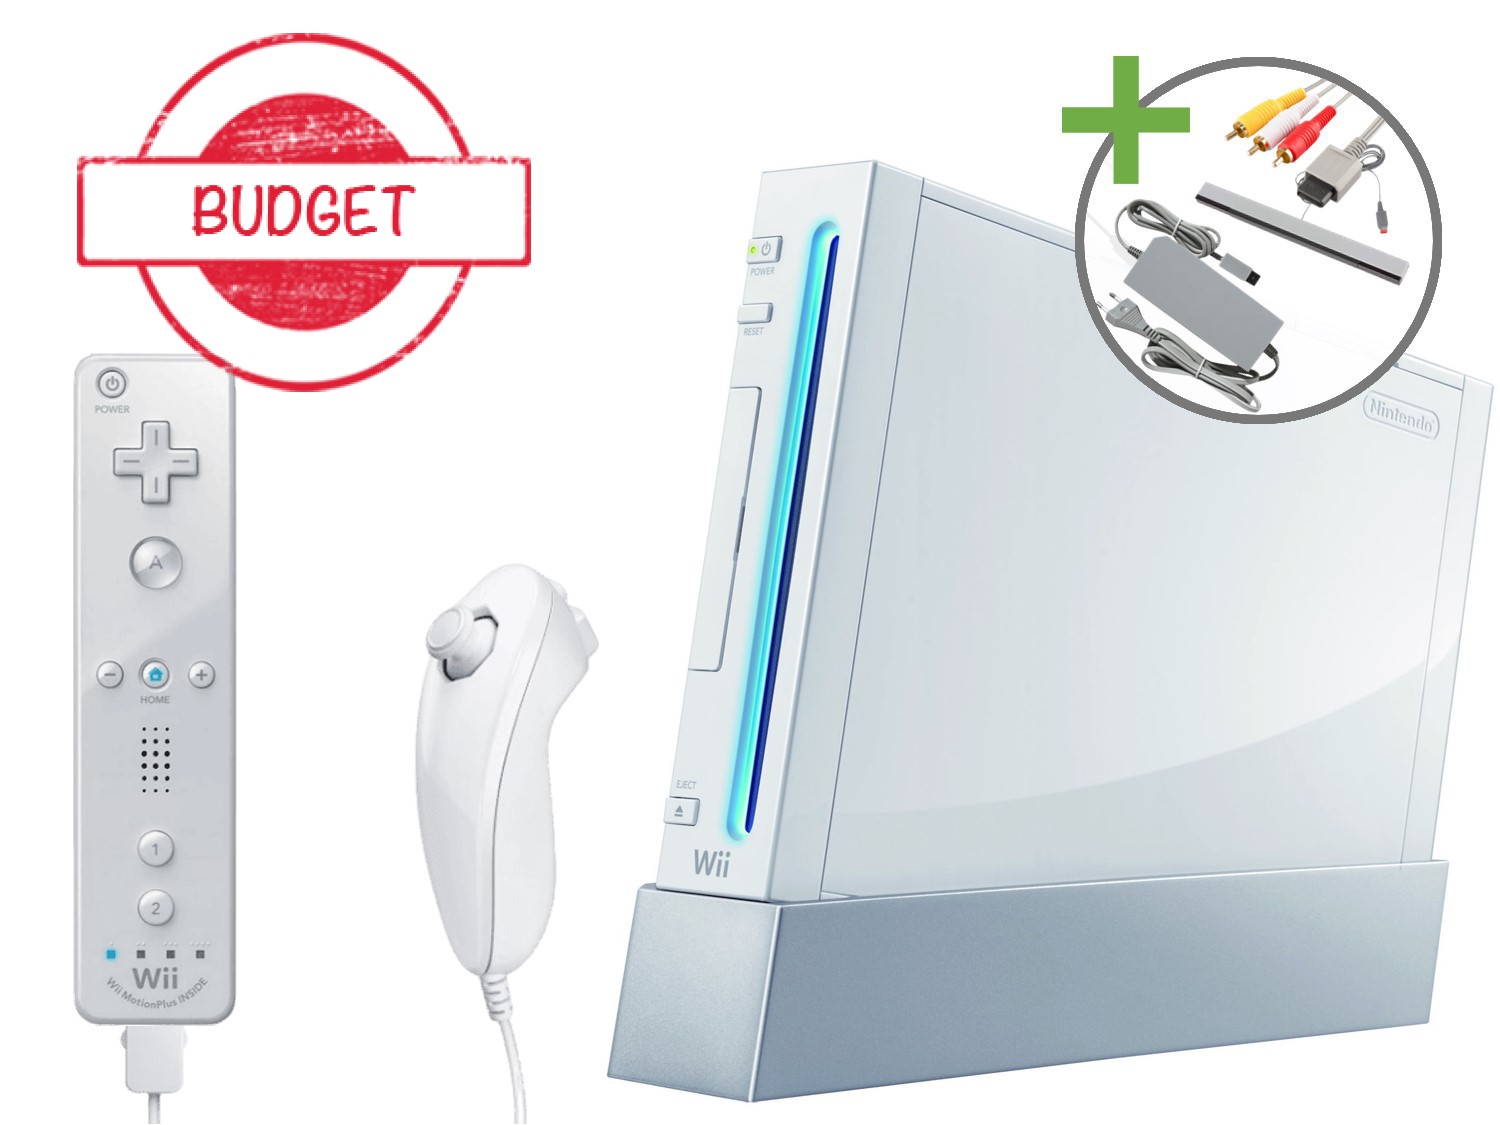 Nintendo Wii Starter Pack - Motion Plus White Edition - Budget Kopen | Wii Hardware